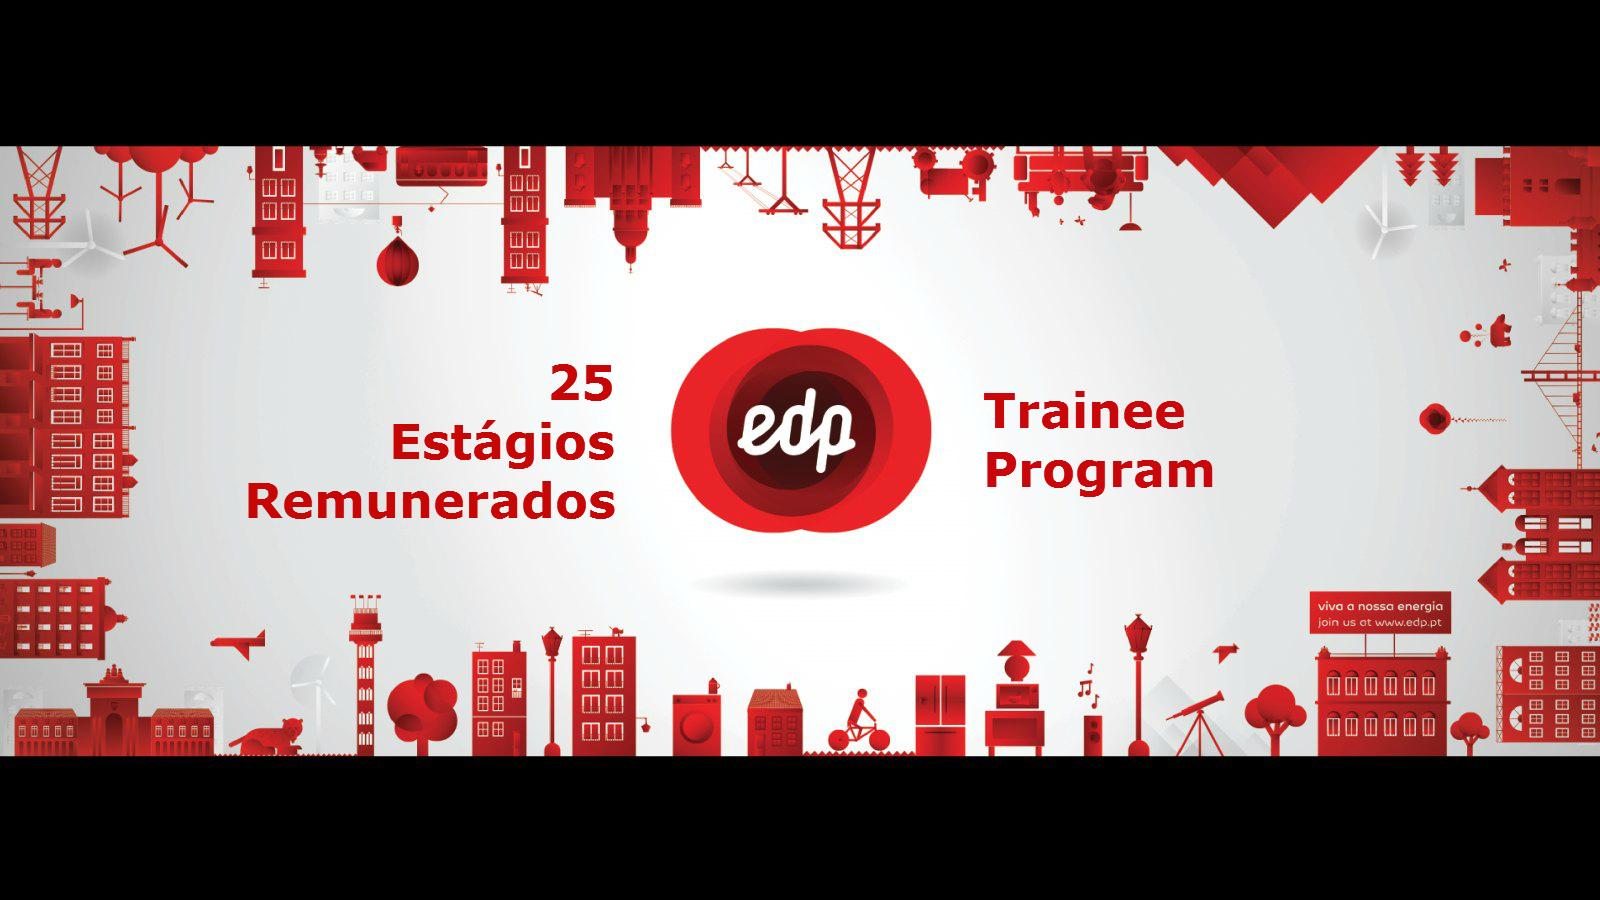 ESTGIOS EDP - 2. edio do EDP Trainee Program